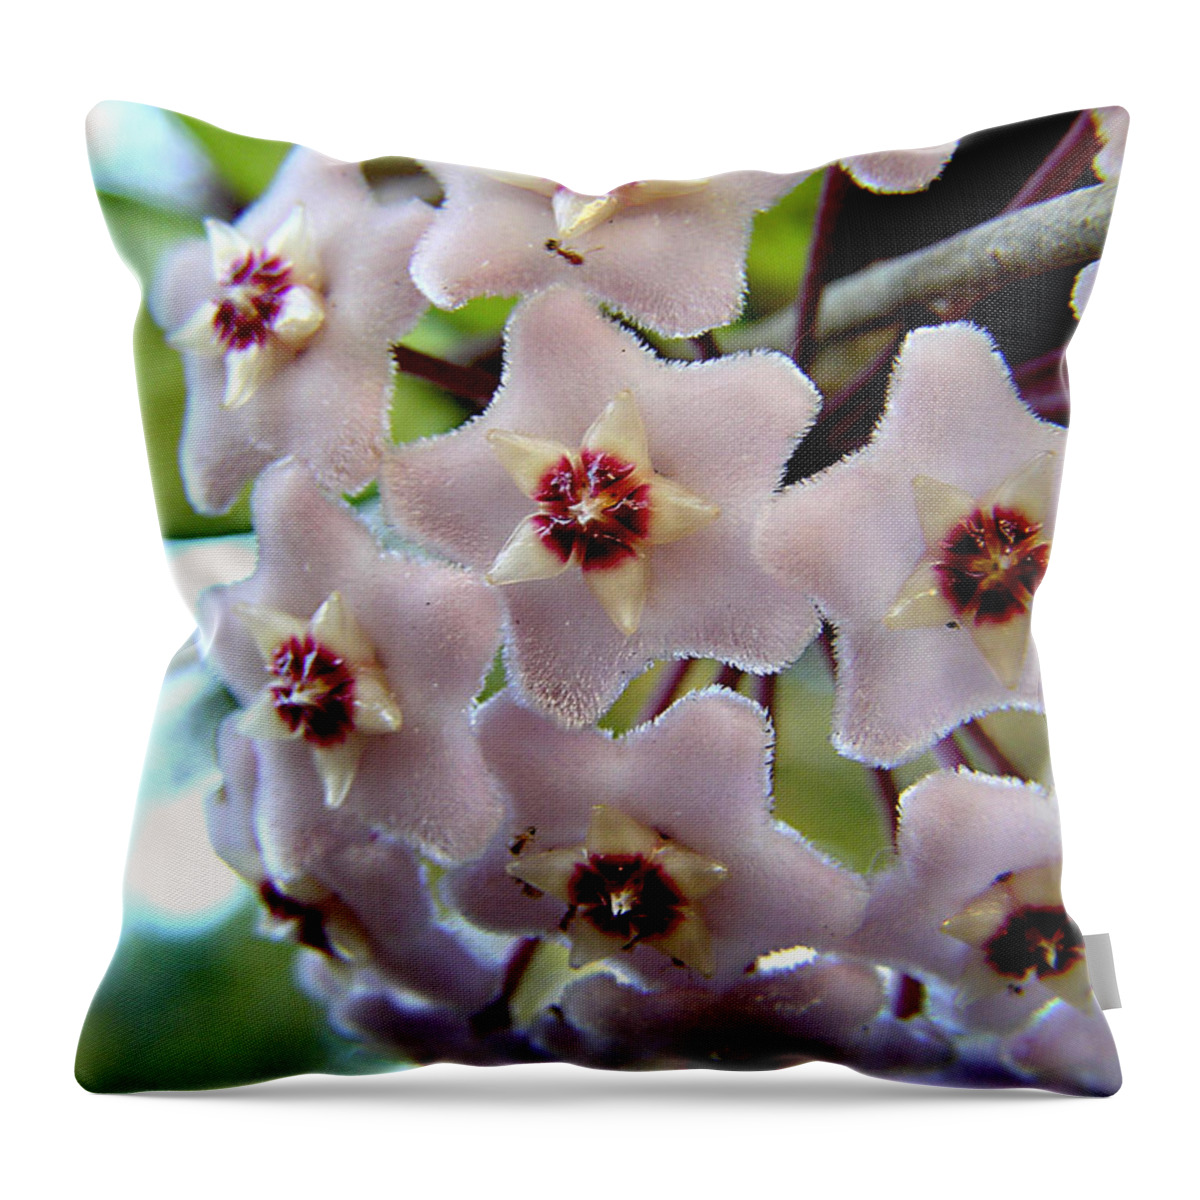 Hoya Throw Pillow featuring the photograph Hoya Blooms by Adam Johnson